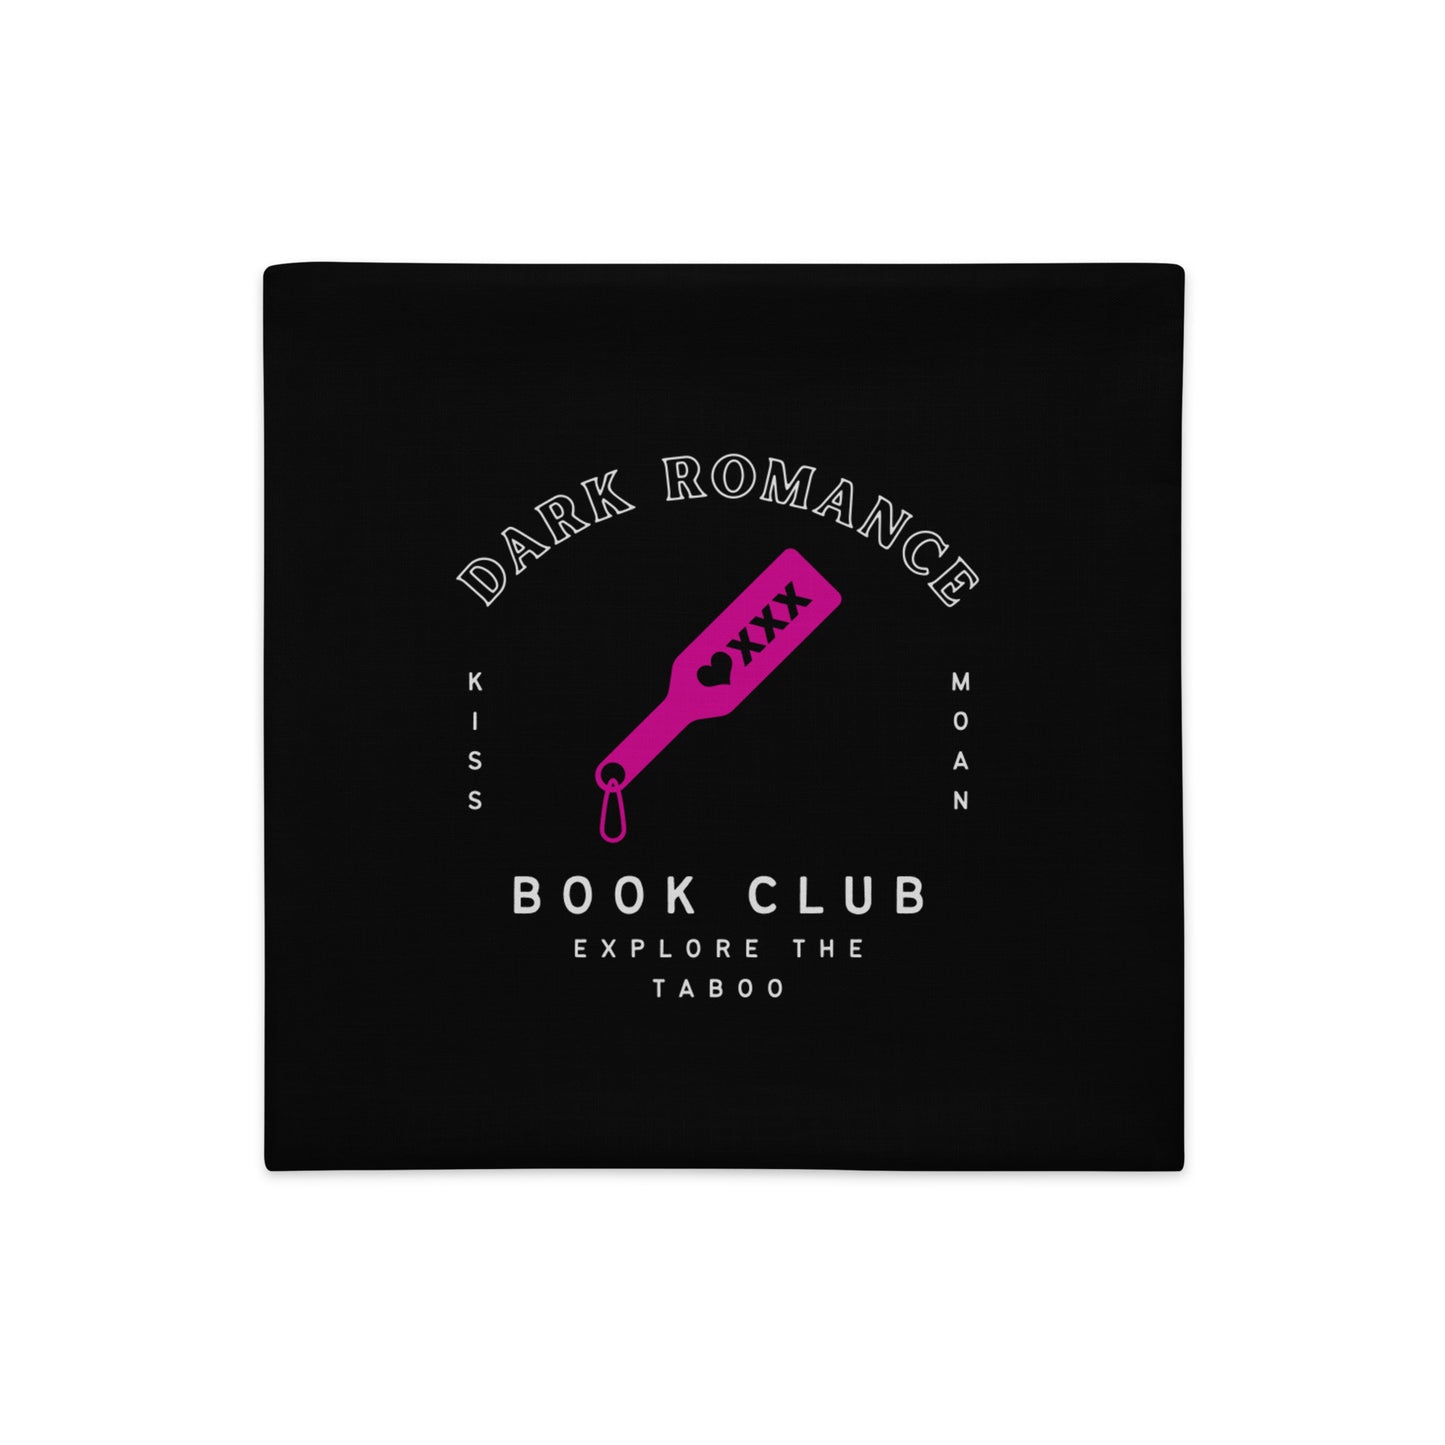 Dark Romance Book Club Pillow Case